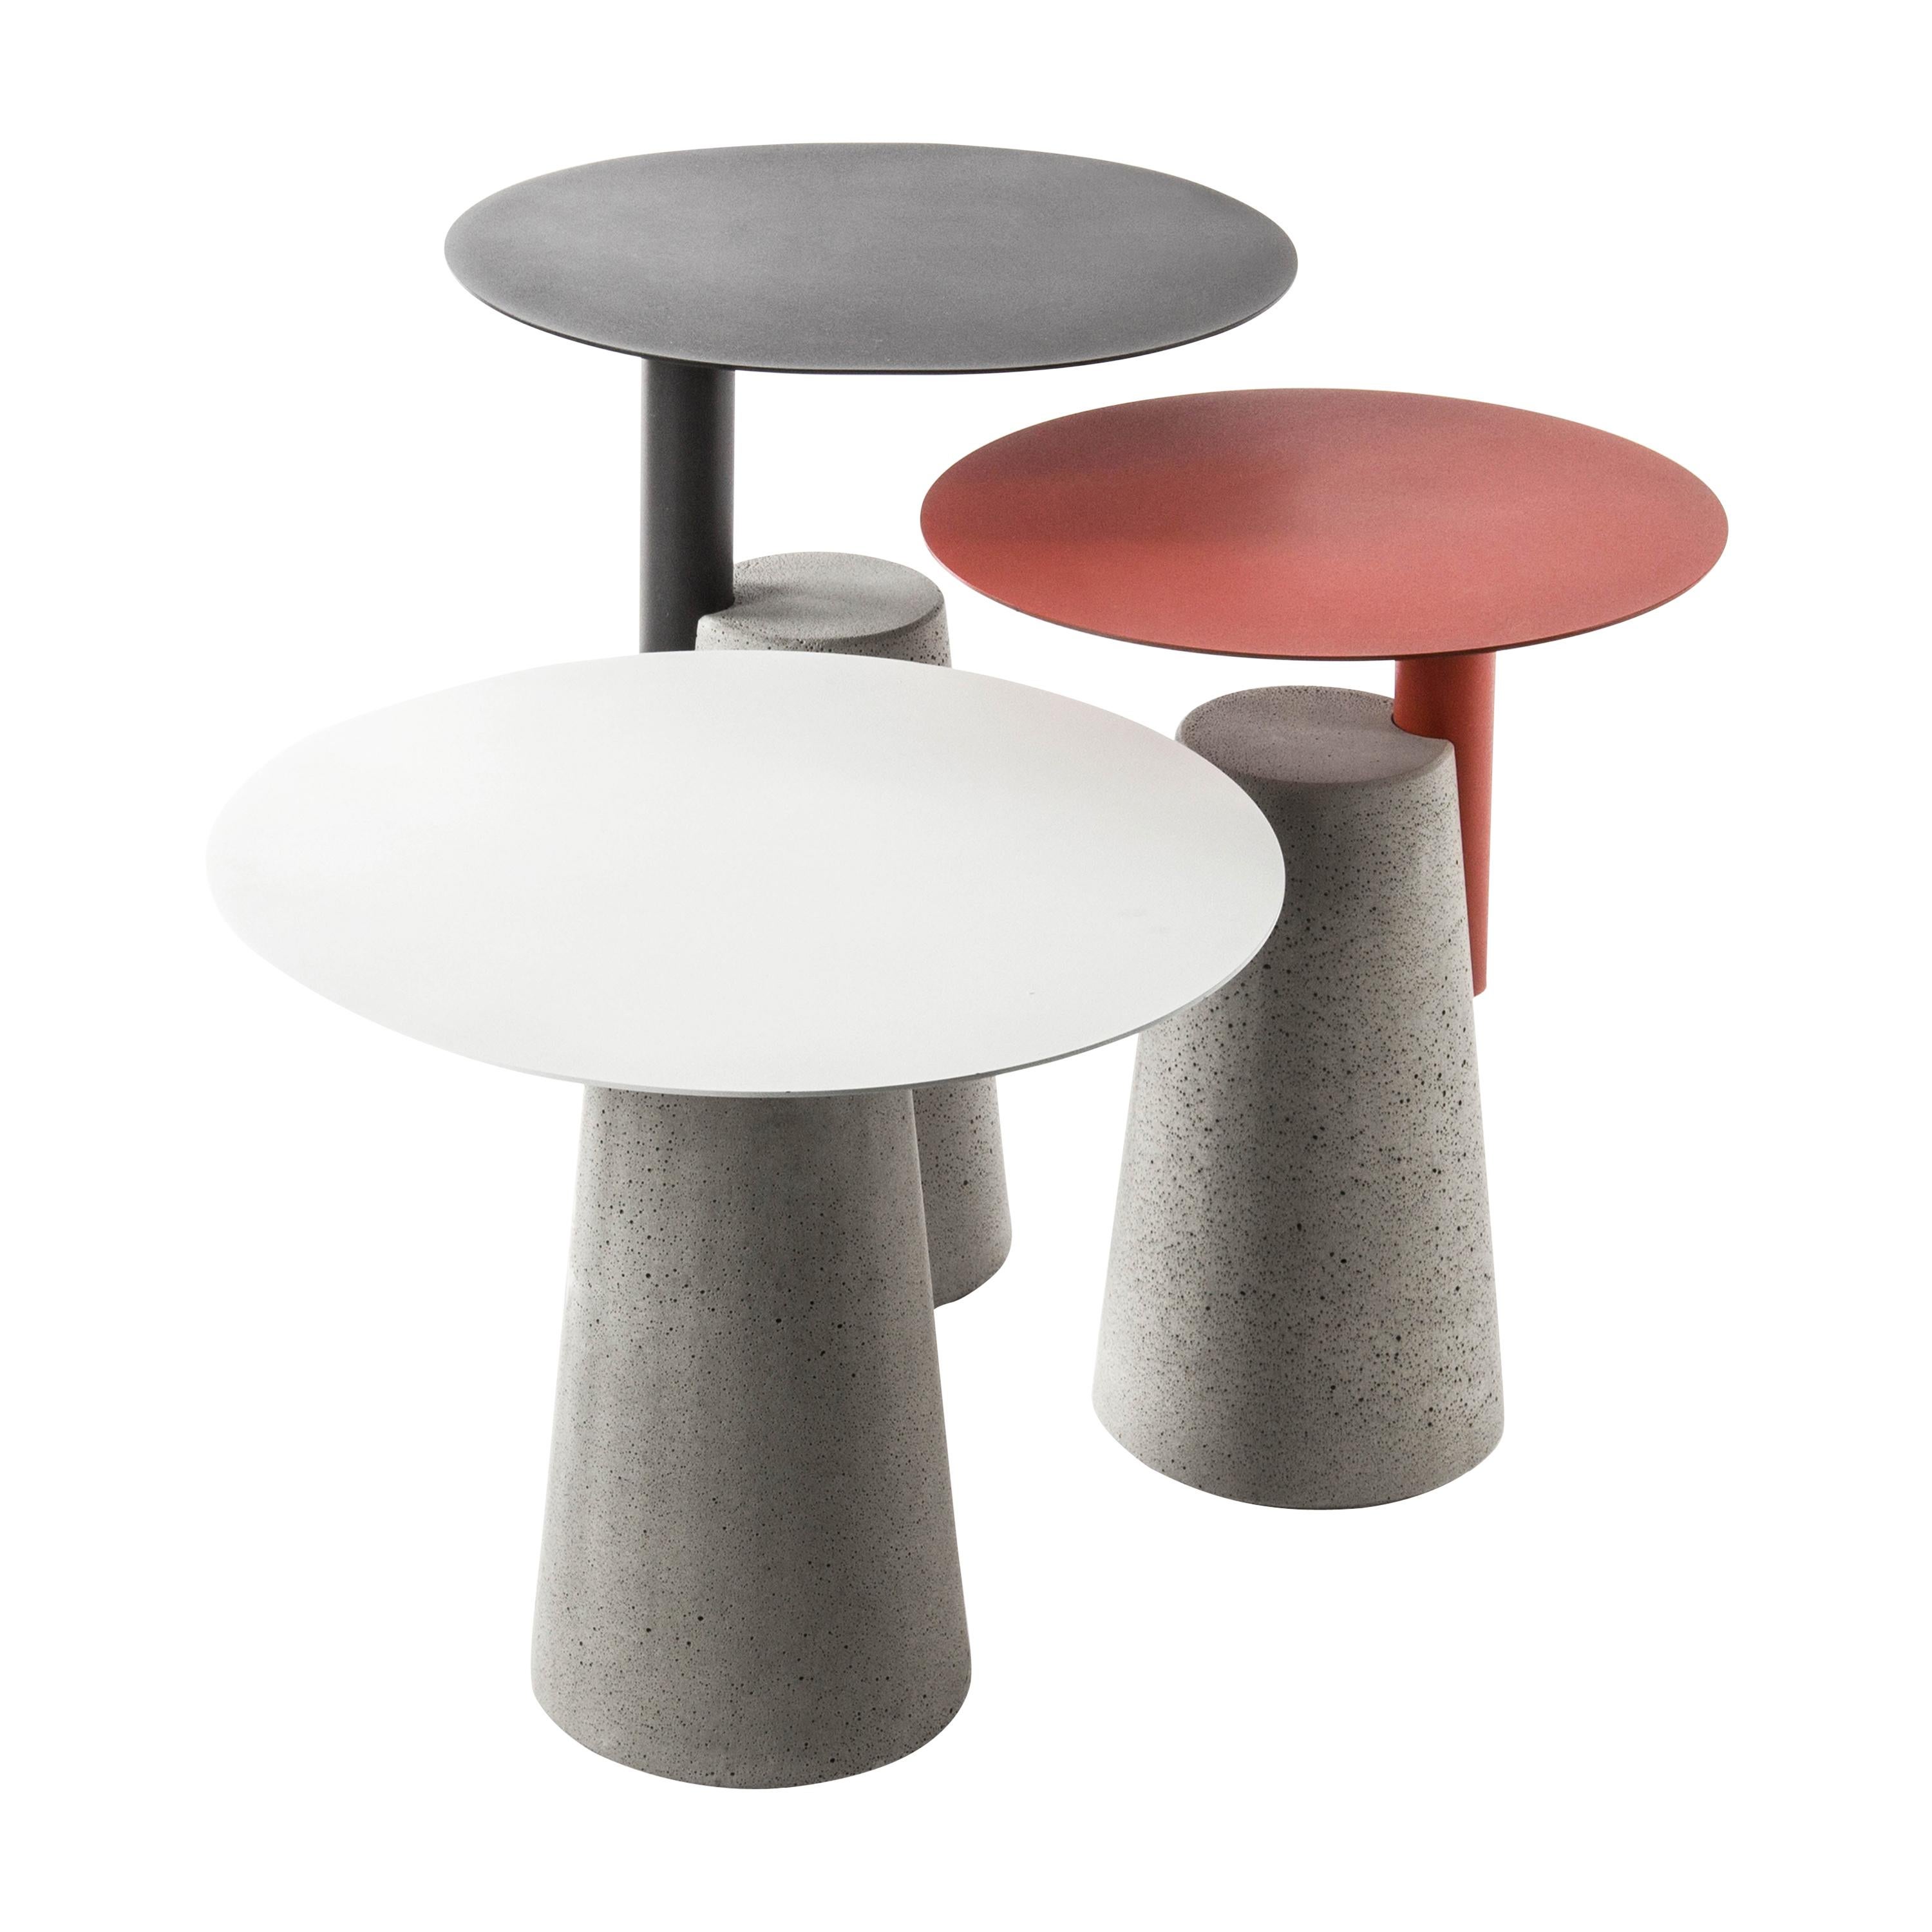 Bentu Design Side Tables